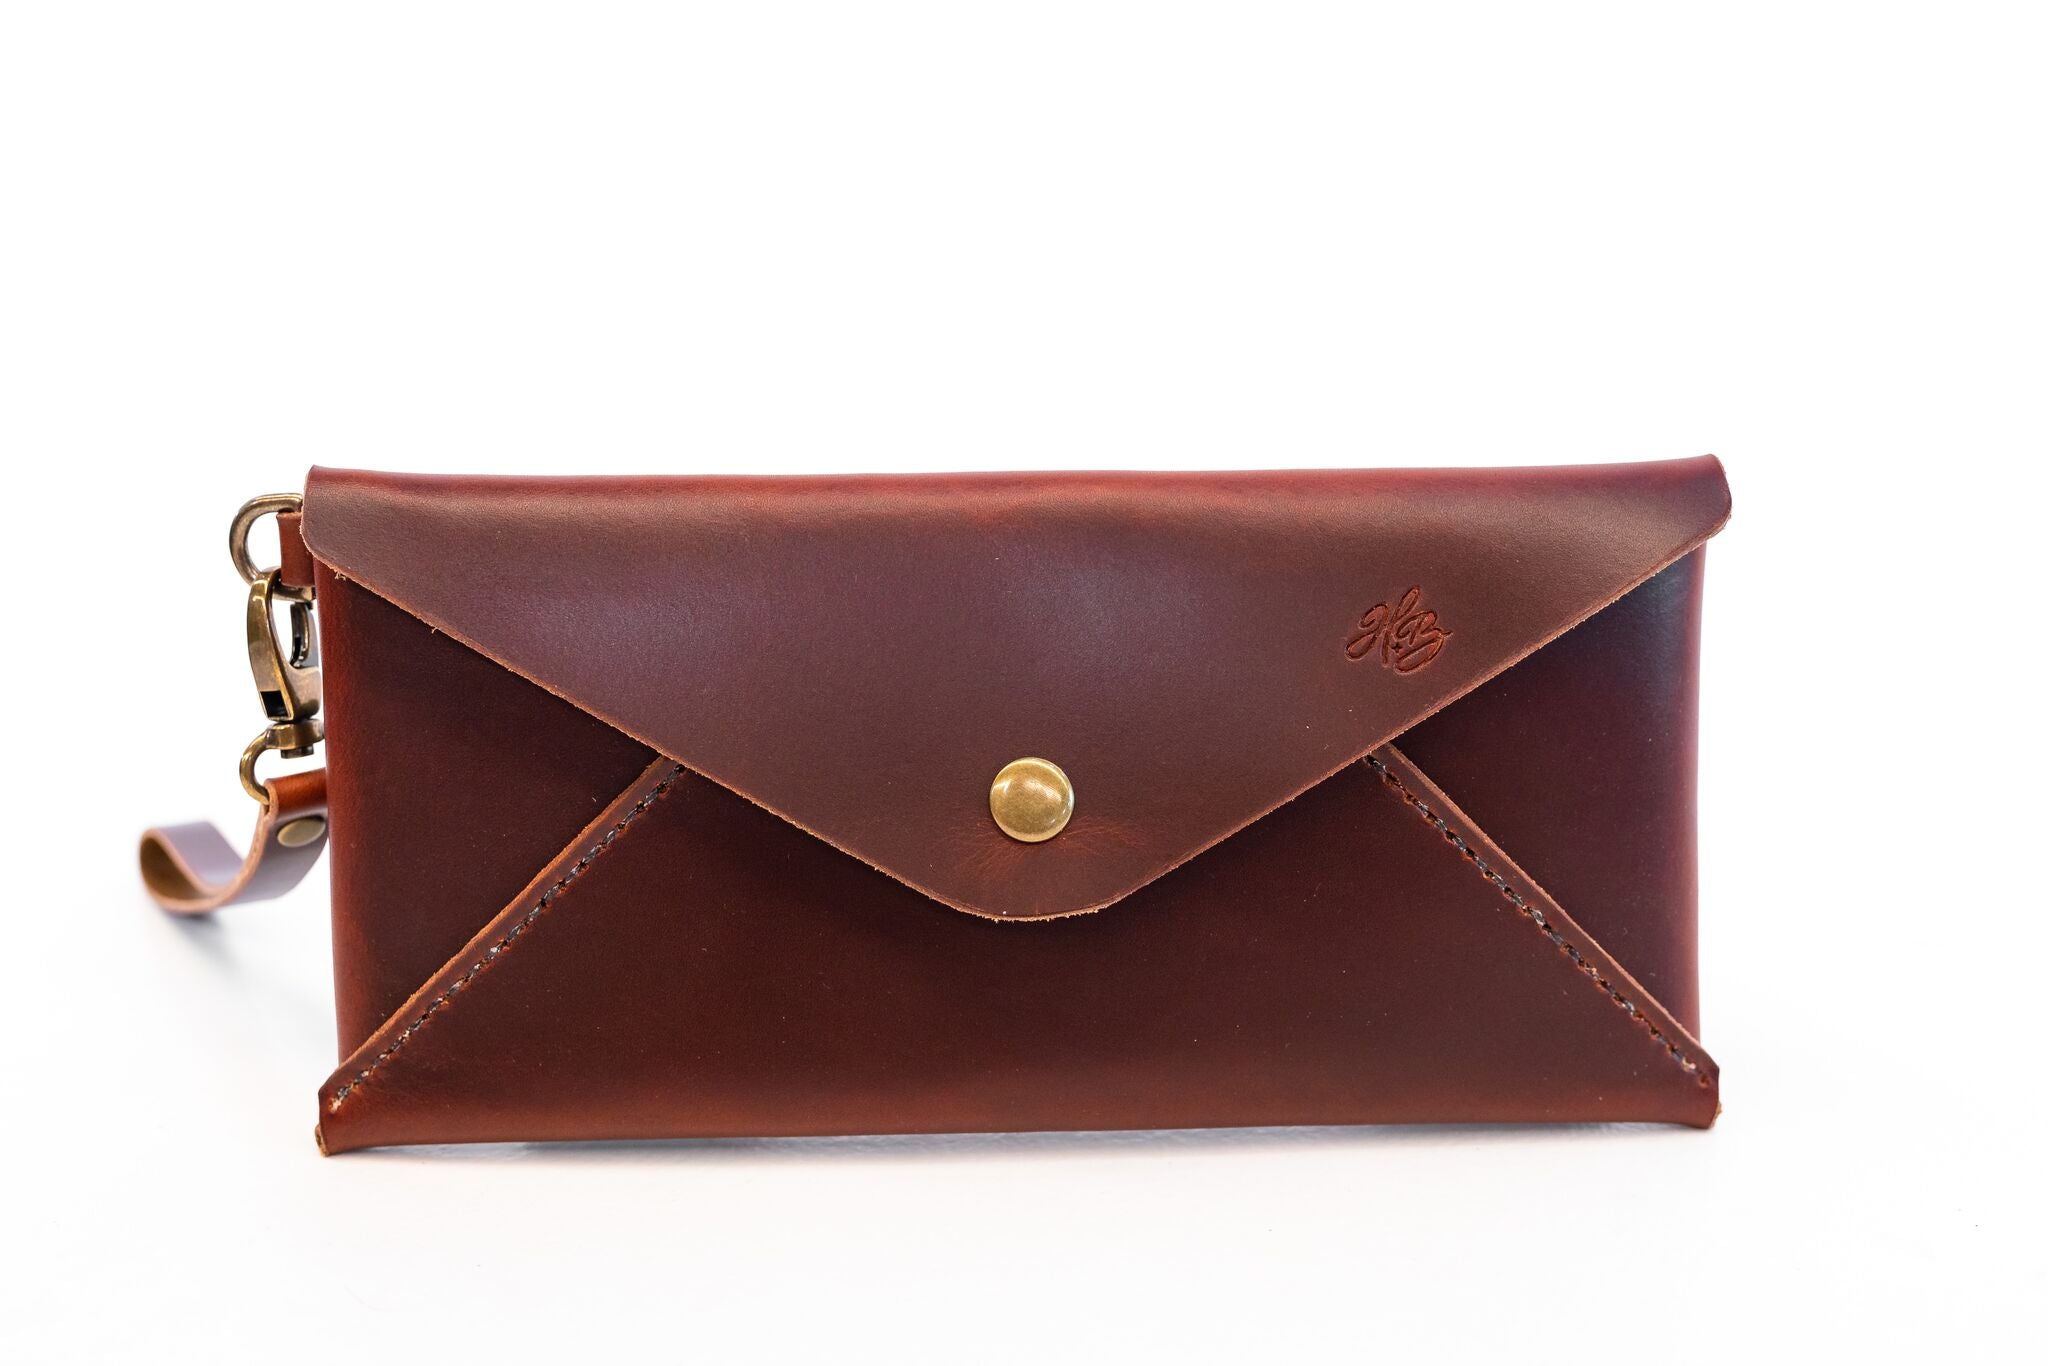 Scrufzak handmade South African Brown leather clutch purse or travel bag | Brown  leather clutch, Leather clutch purse, Leather clutch